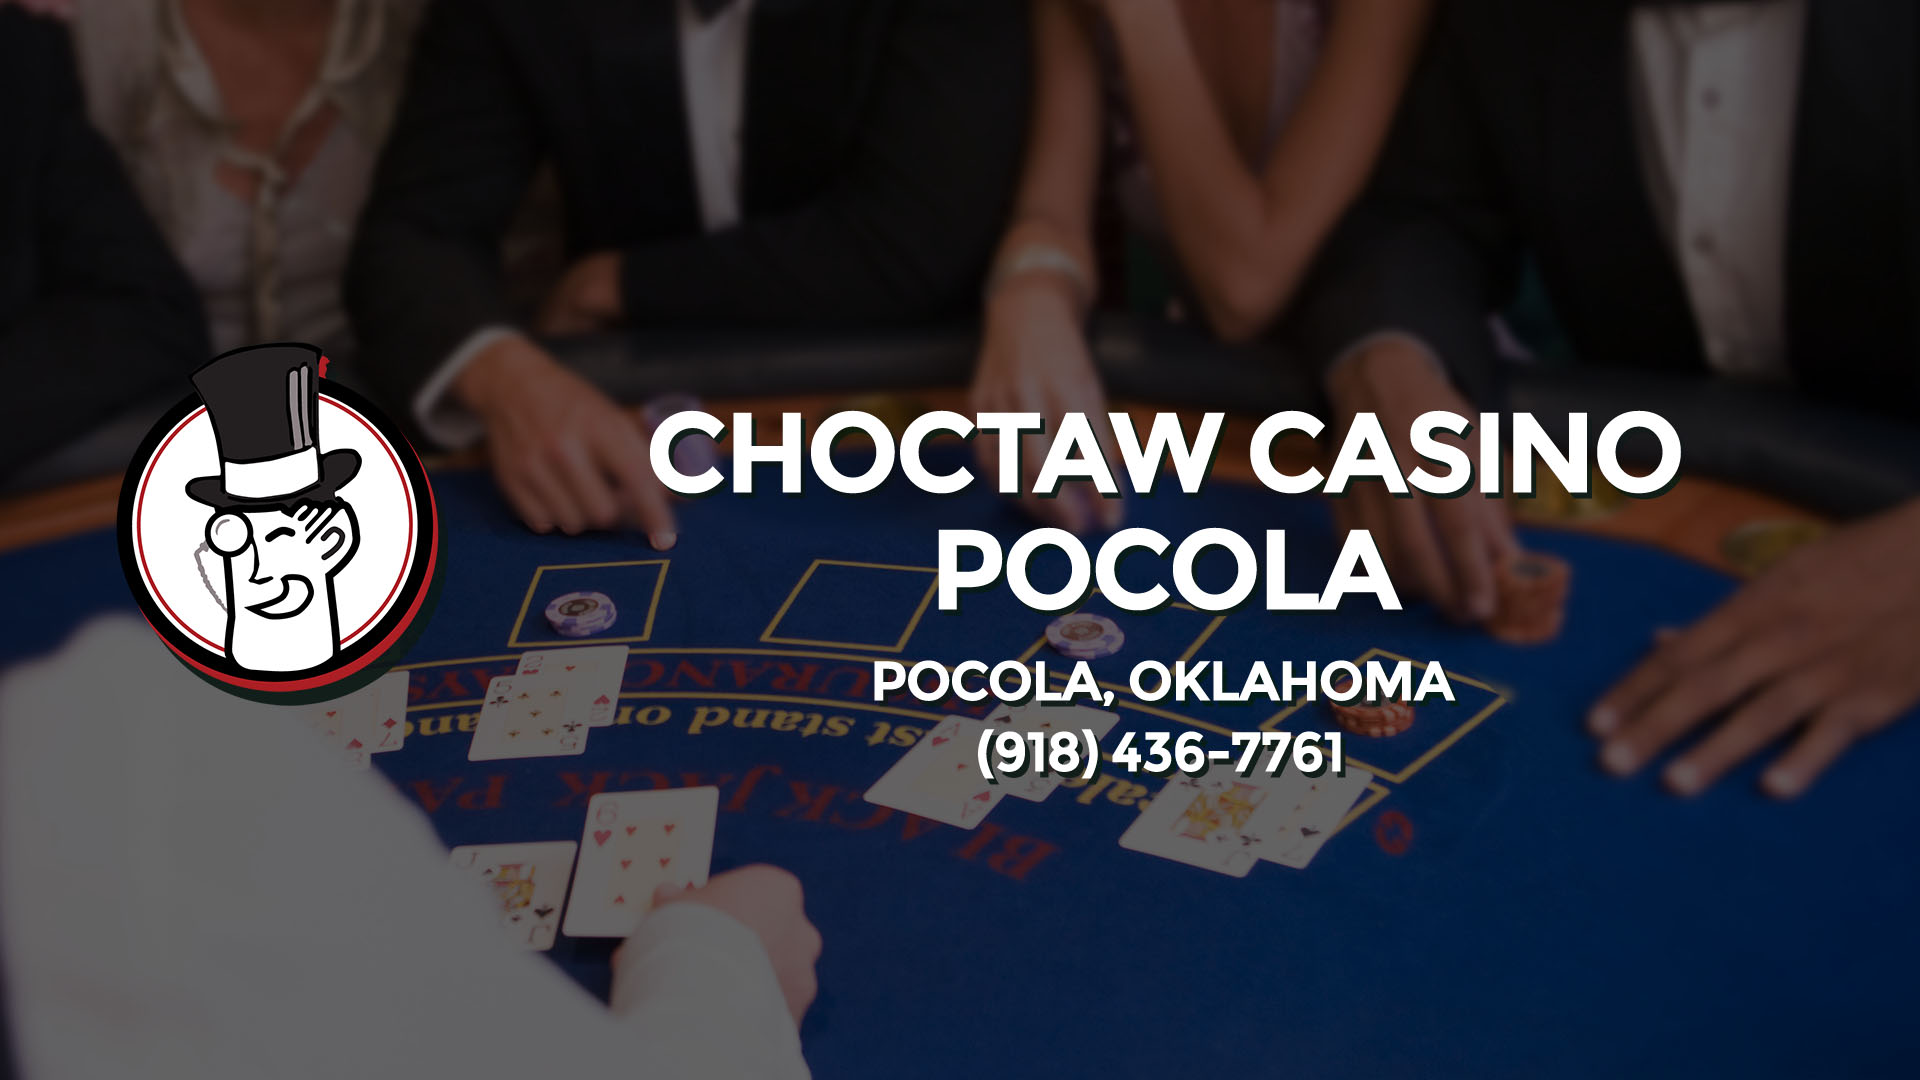 choctaw casino pocola promotions